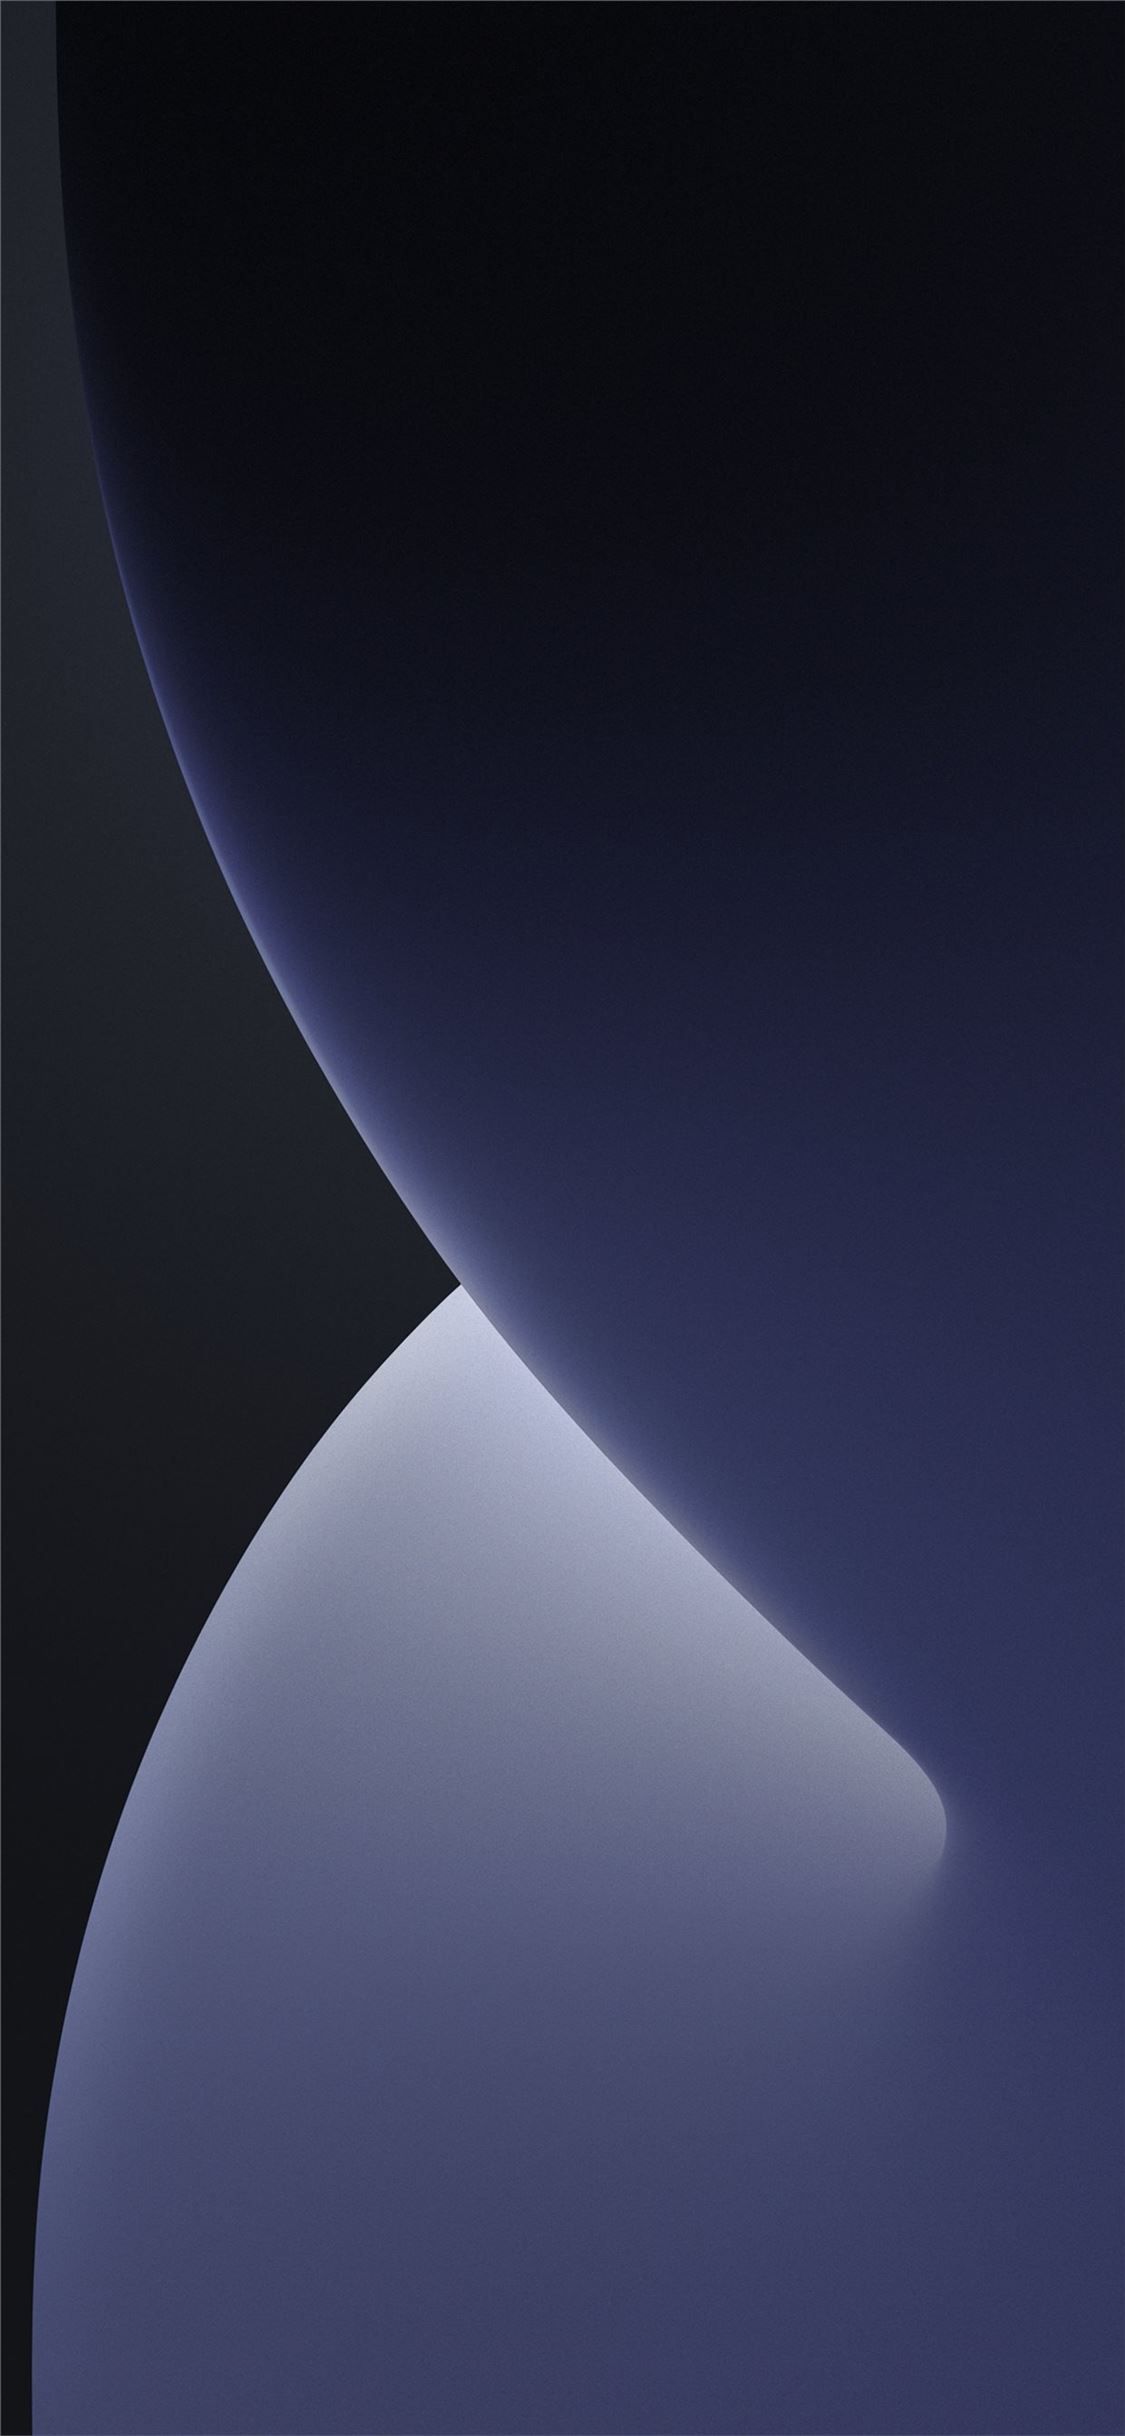 Best Aesthetic iPhone 11 Wallpaper HD [2020]